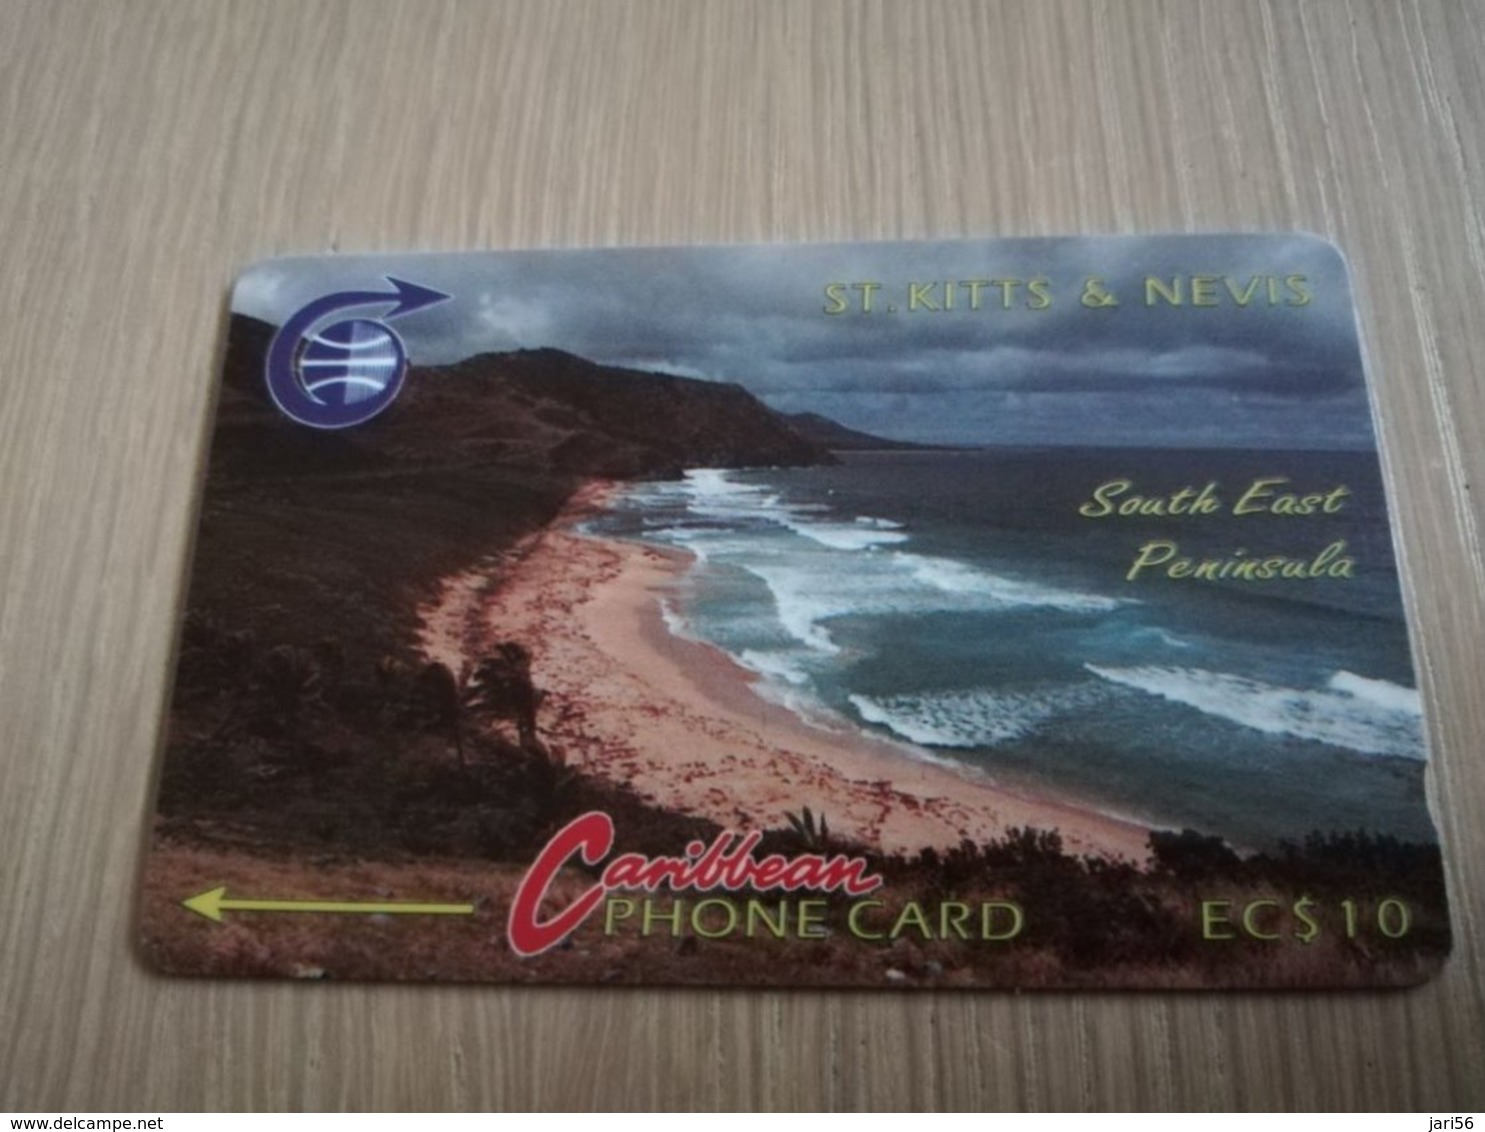 ST KITTS & NEVIS   GPT CARD $10,-   3CSKB     NO STK-3B    SOUTH EAST PENINSULA     Fine Used Card  **2328** - St. Kitts En Nevis